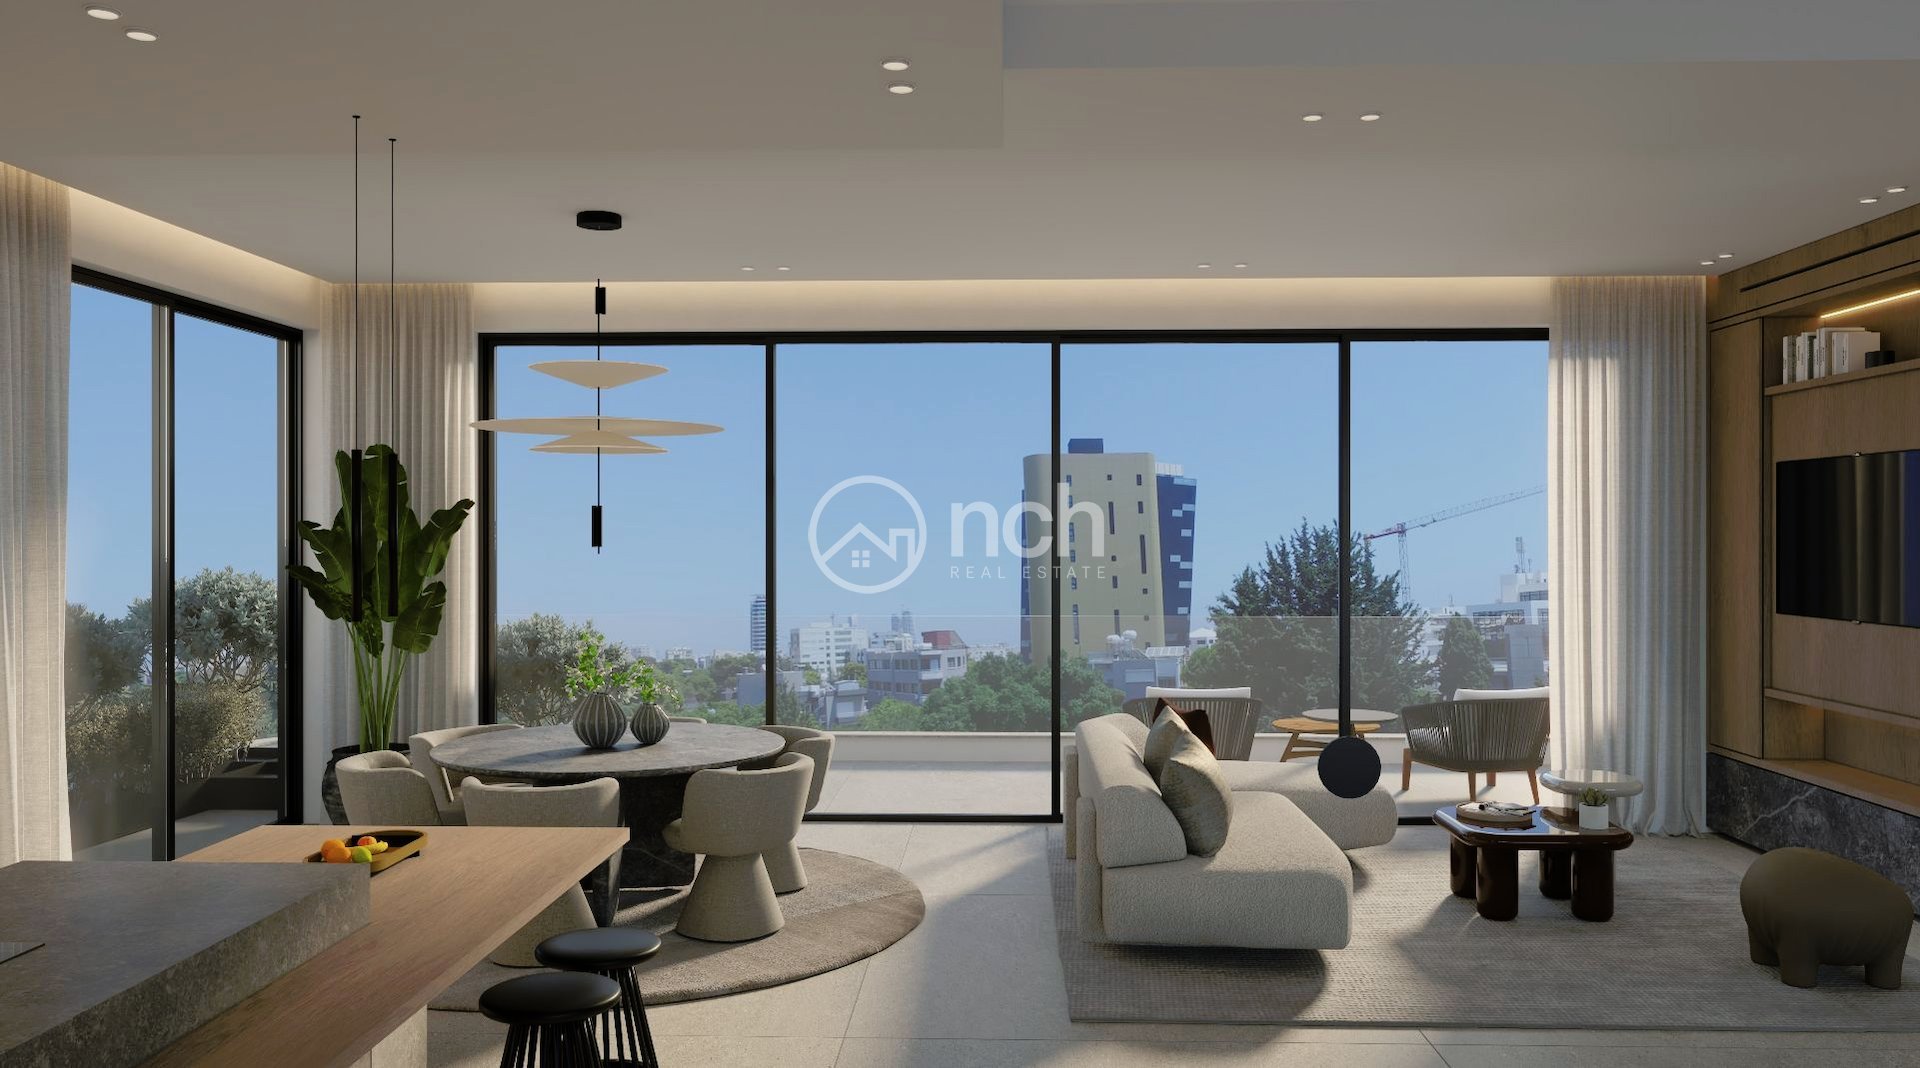 1 Bedroom Apartment for Sale in Limassol – Agios Nektarios